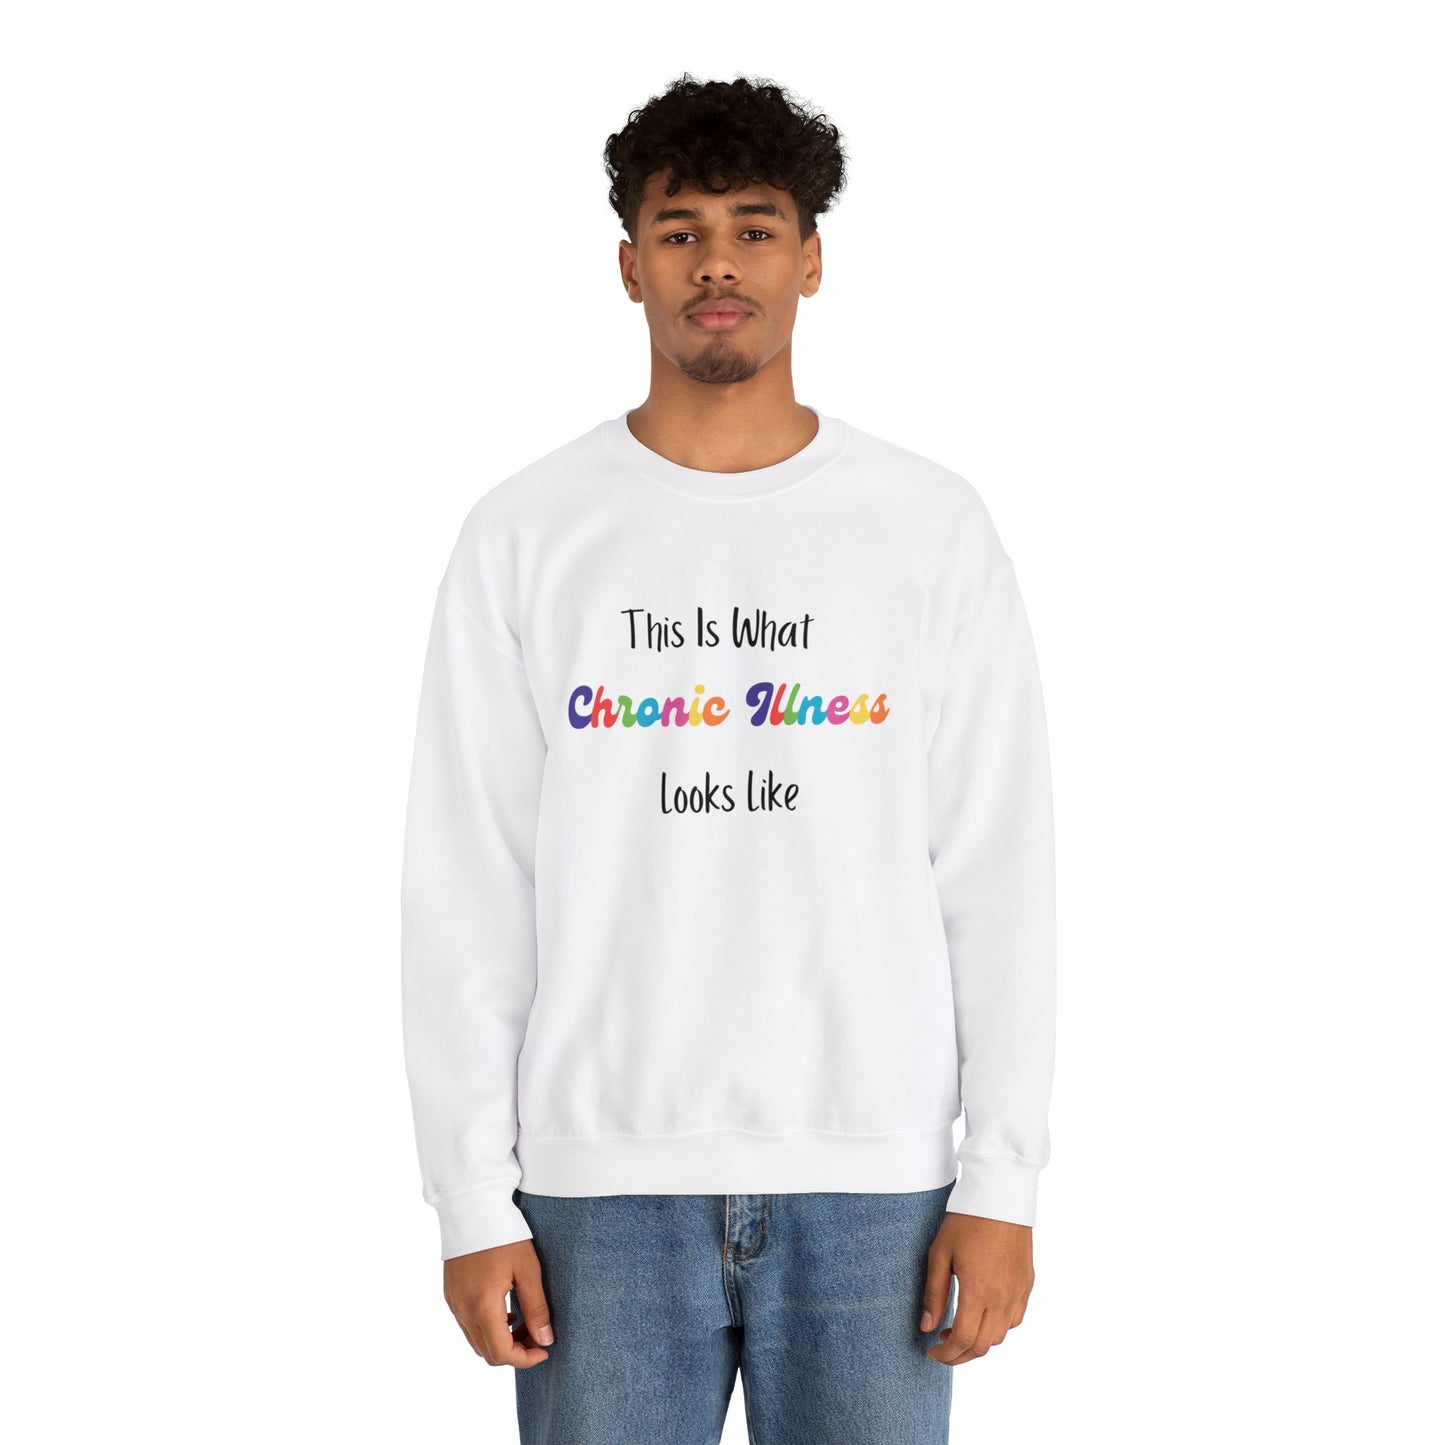 This Is What Chronic Illness Looks Like Sweatshirt